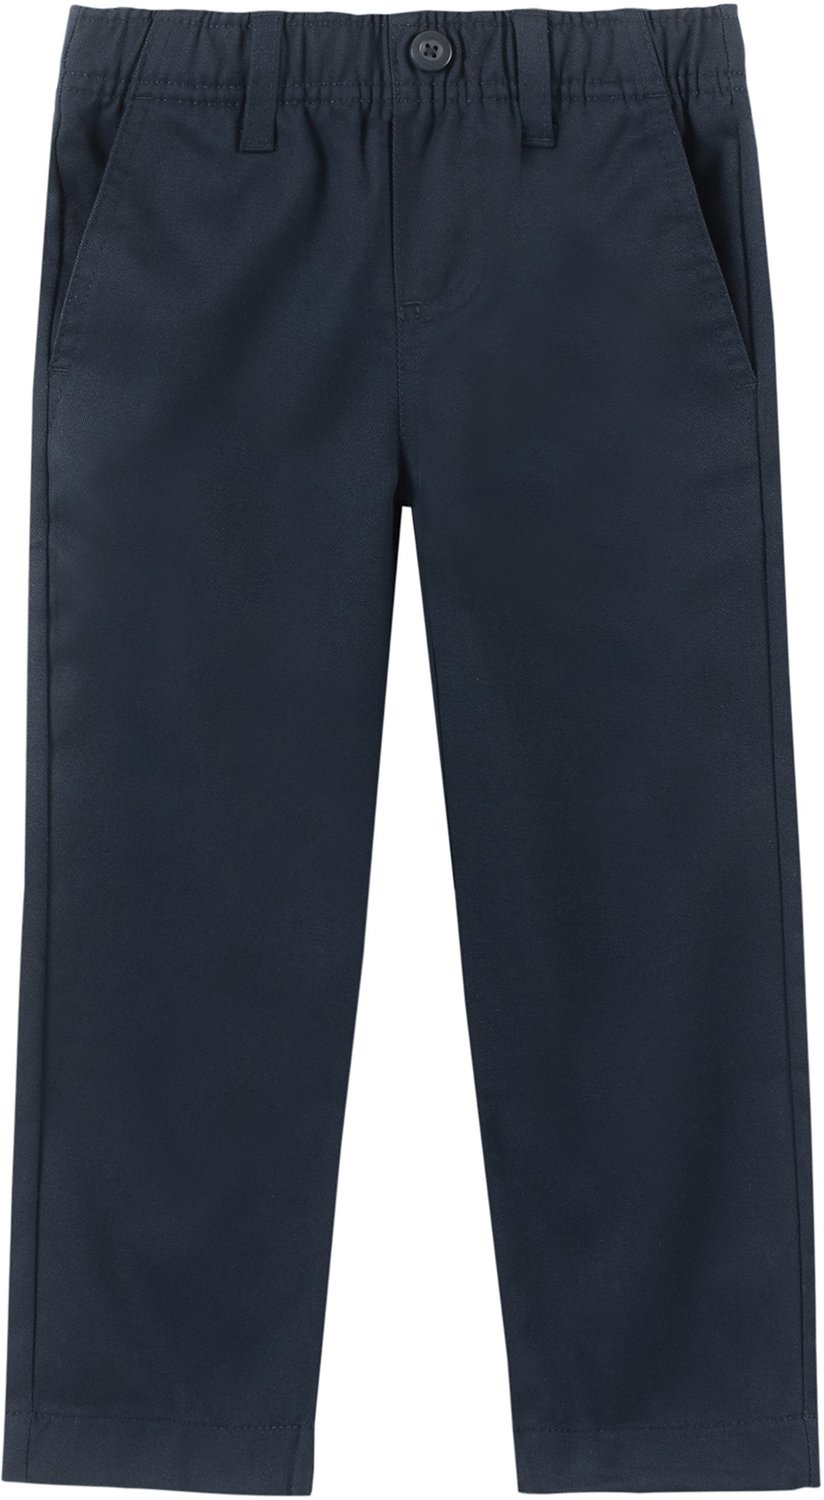 Hot Item] Navy Blue School Blazer and Khaki Pants for School Wear